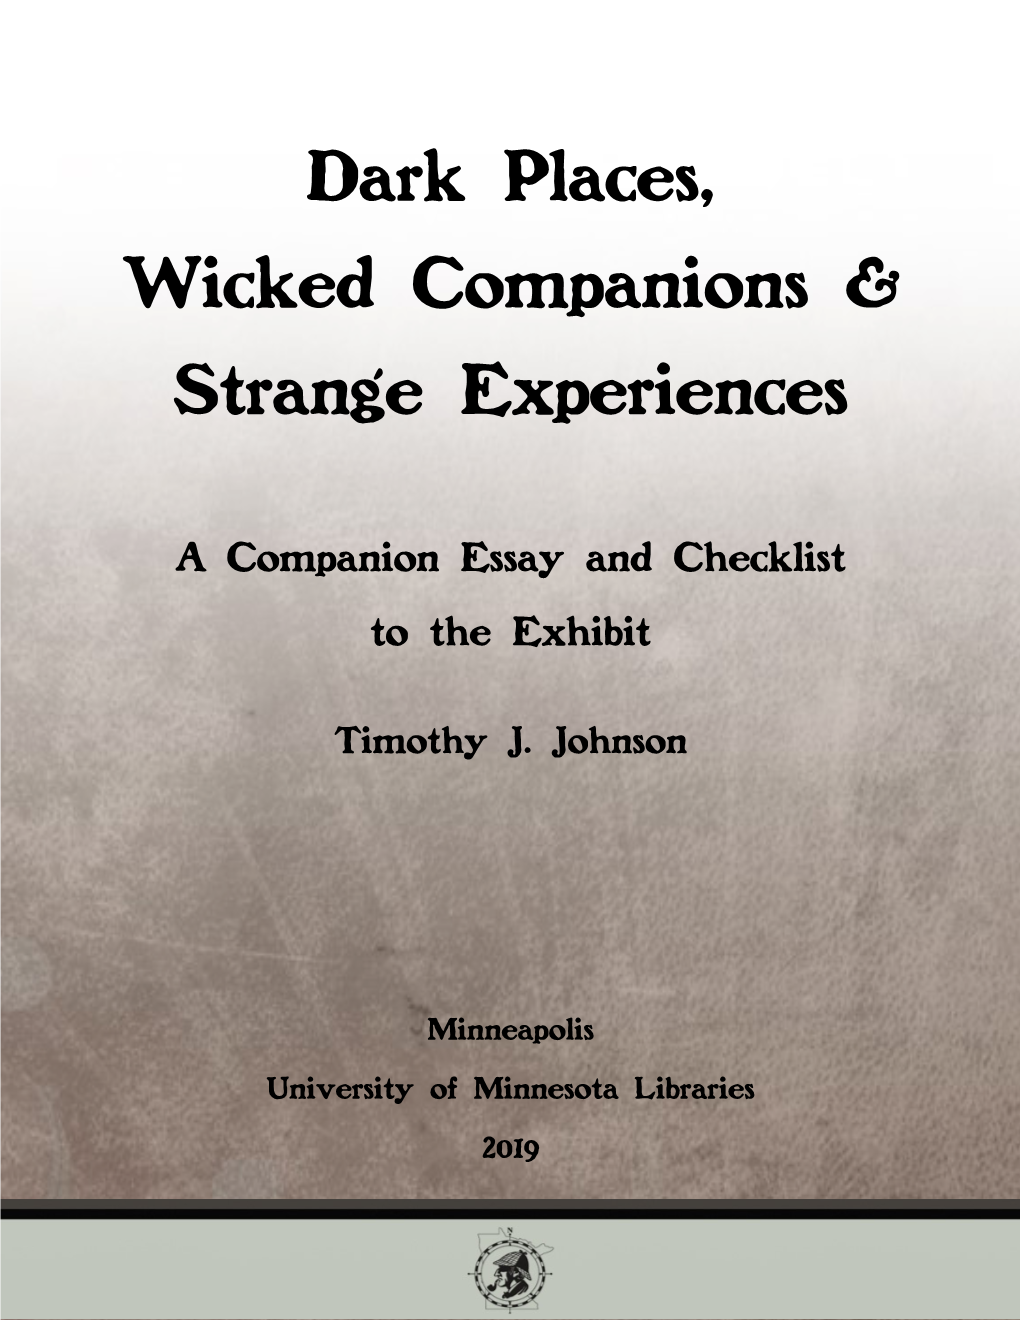 Dark Places, Wicked Companions & Strange Experiences